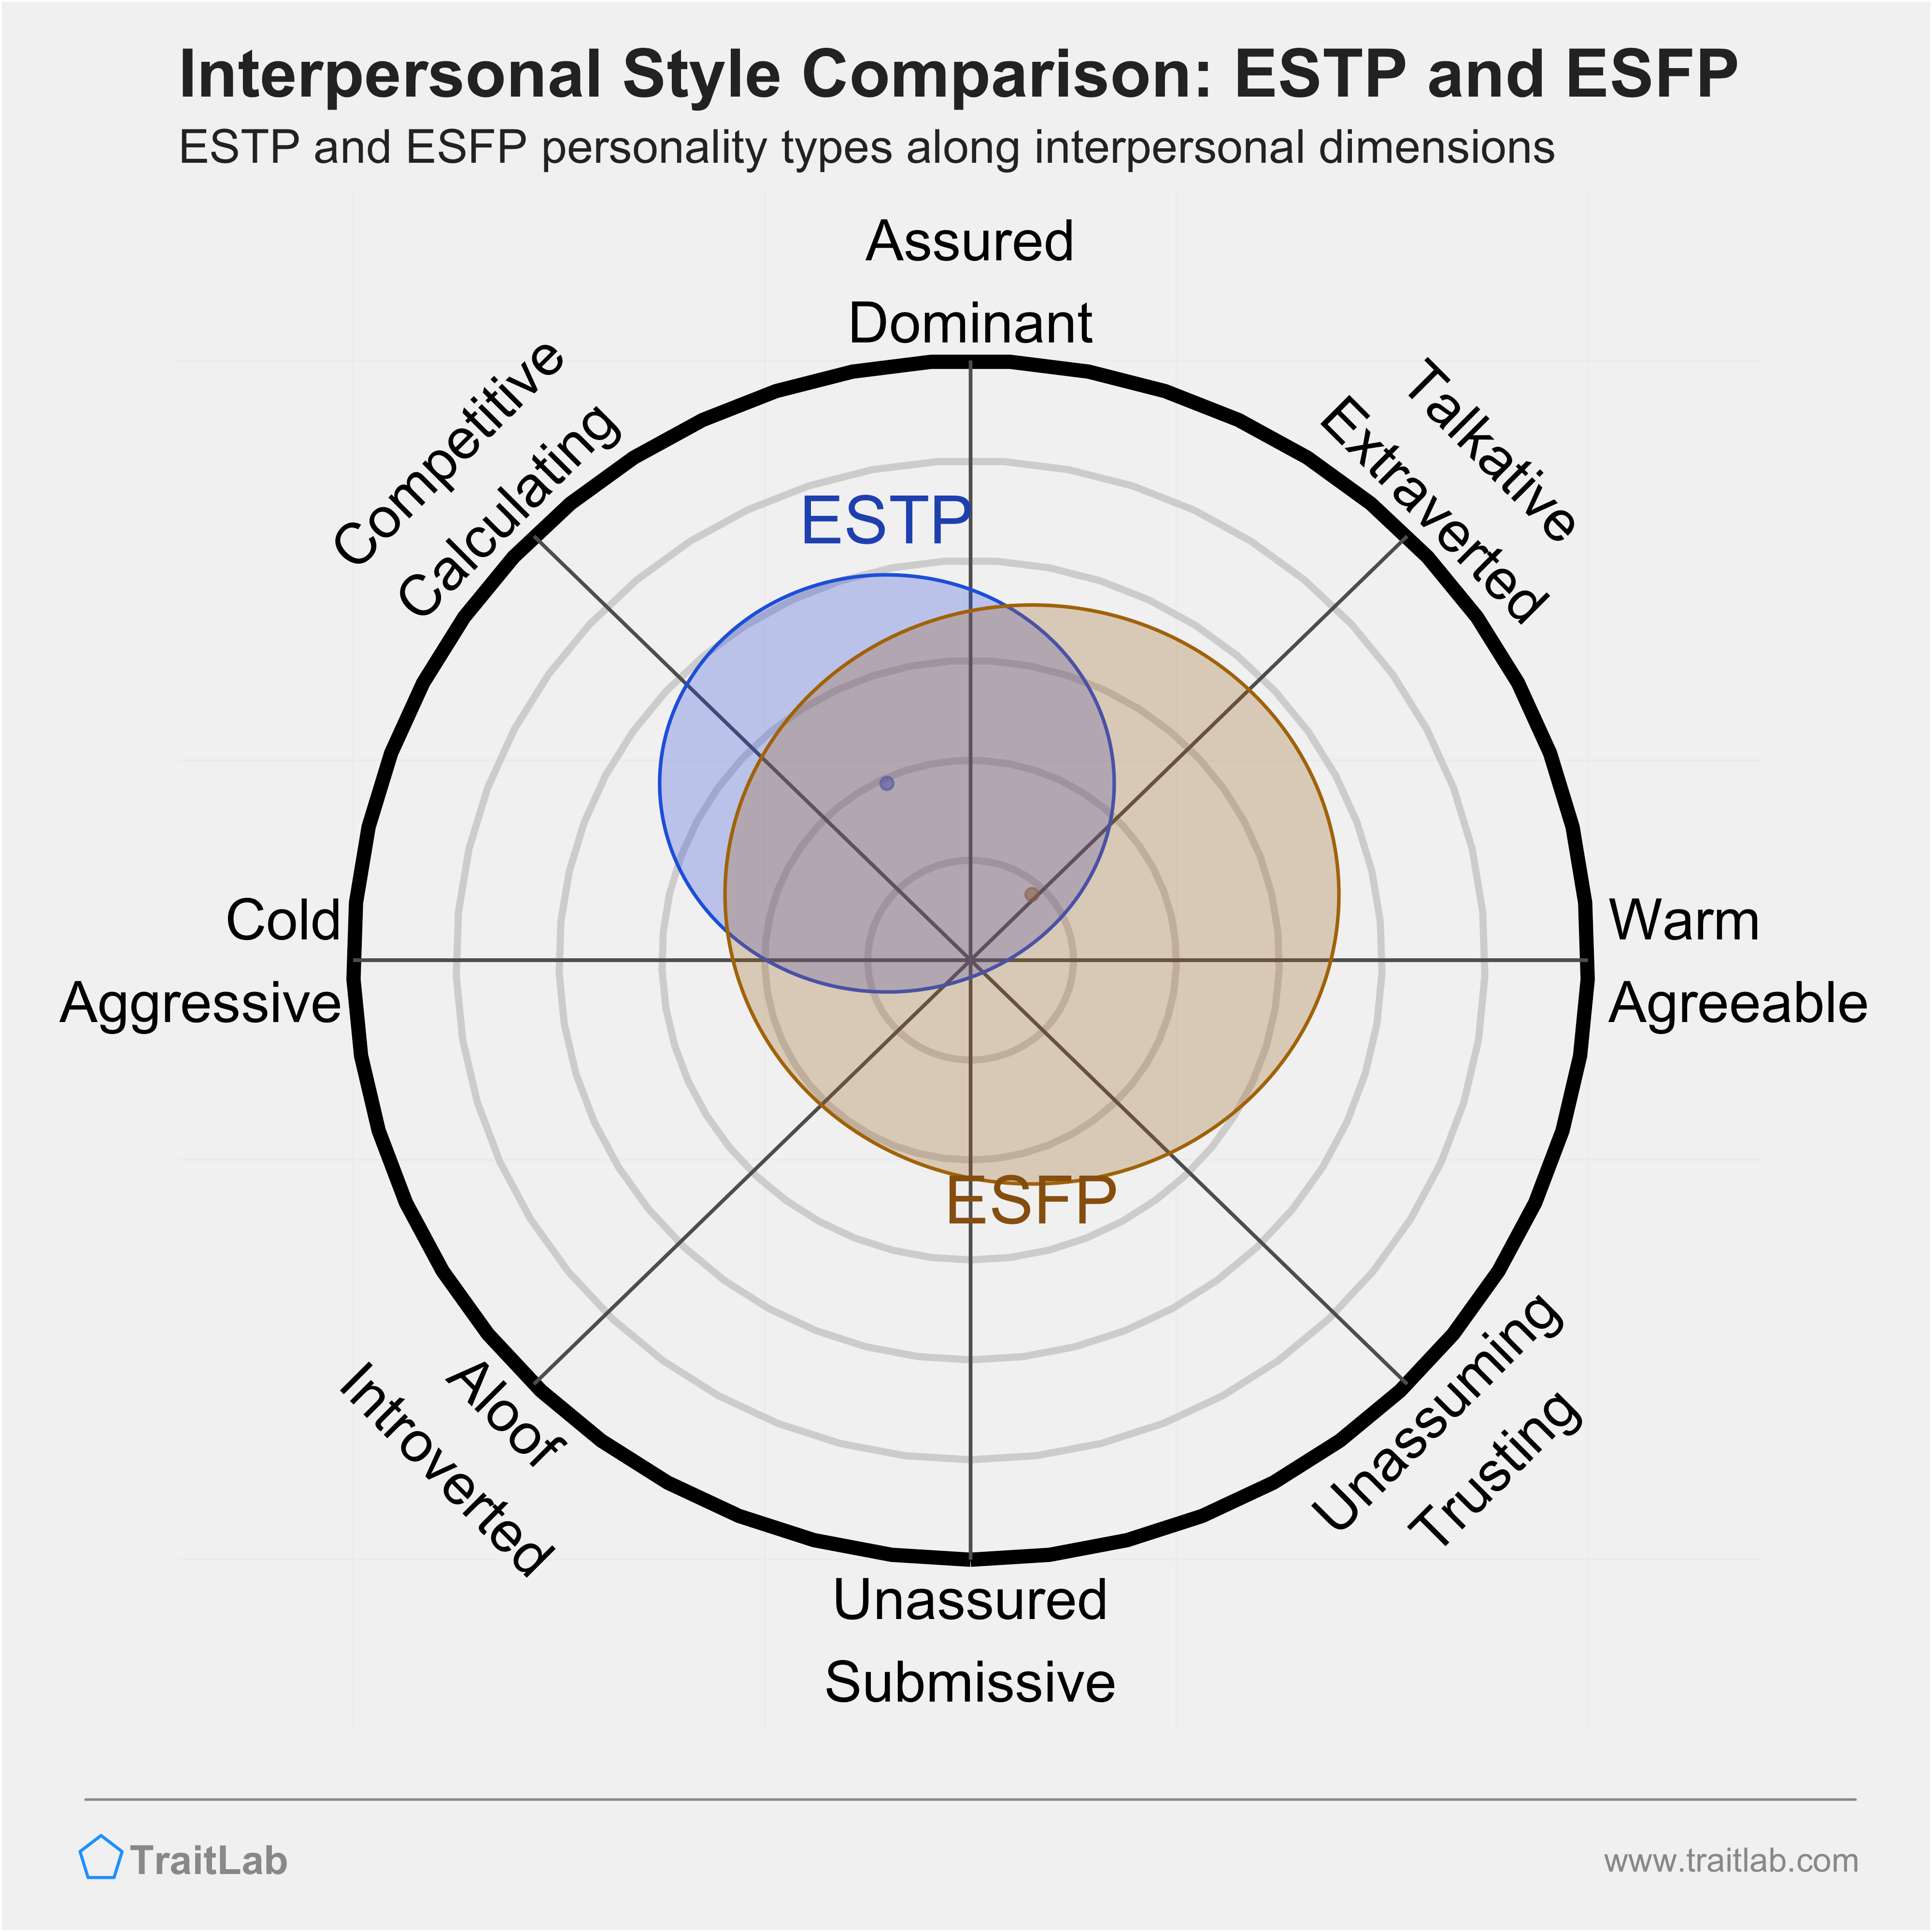 ESTP and ESFP comparison across interpersonal dimensions